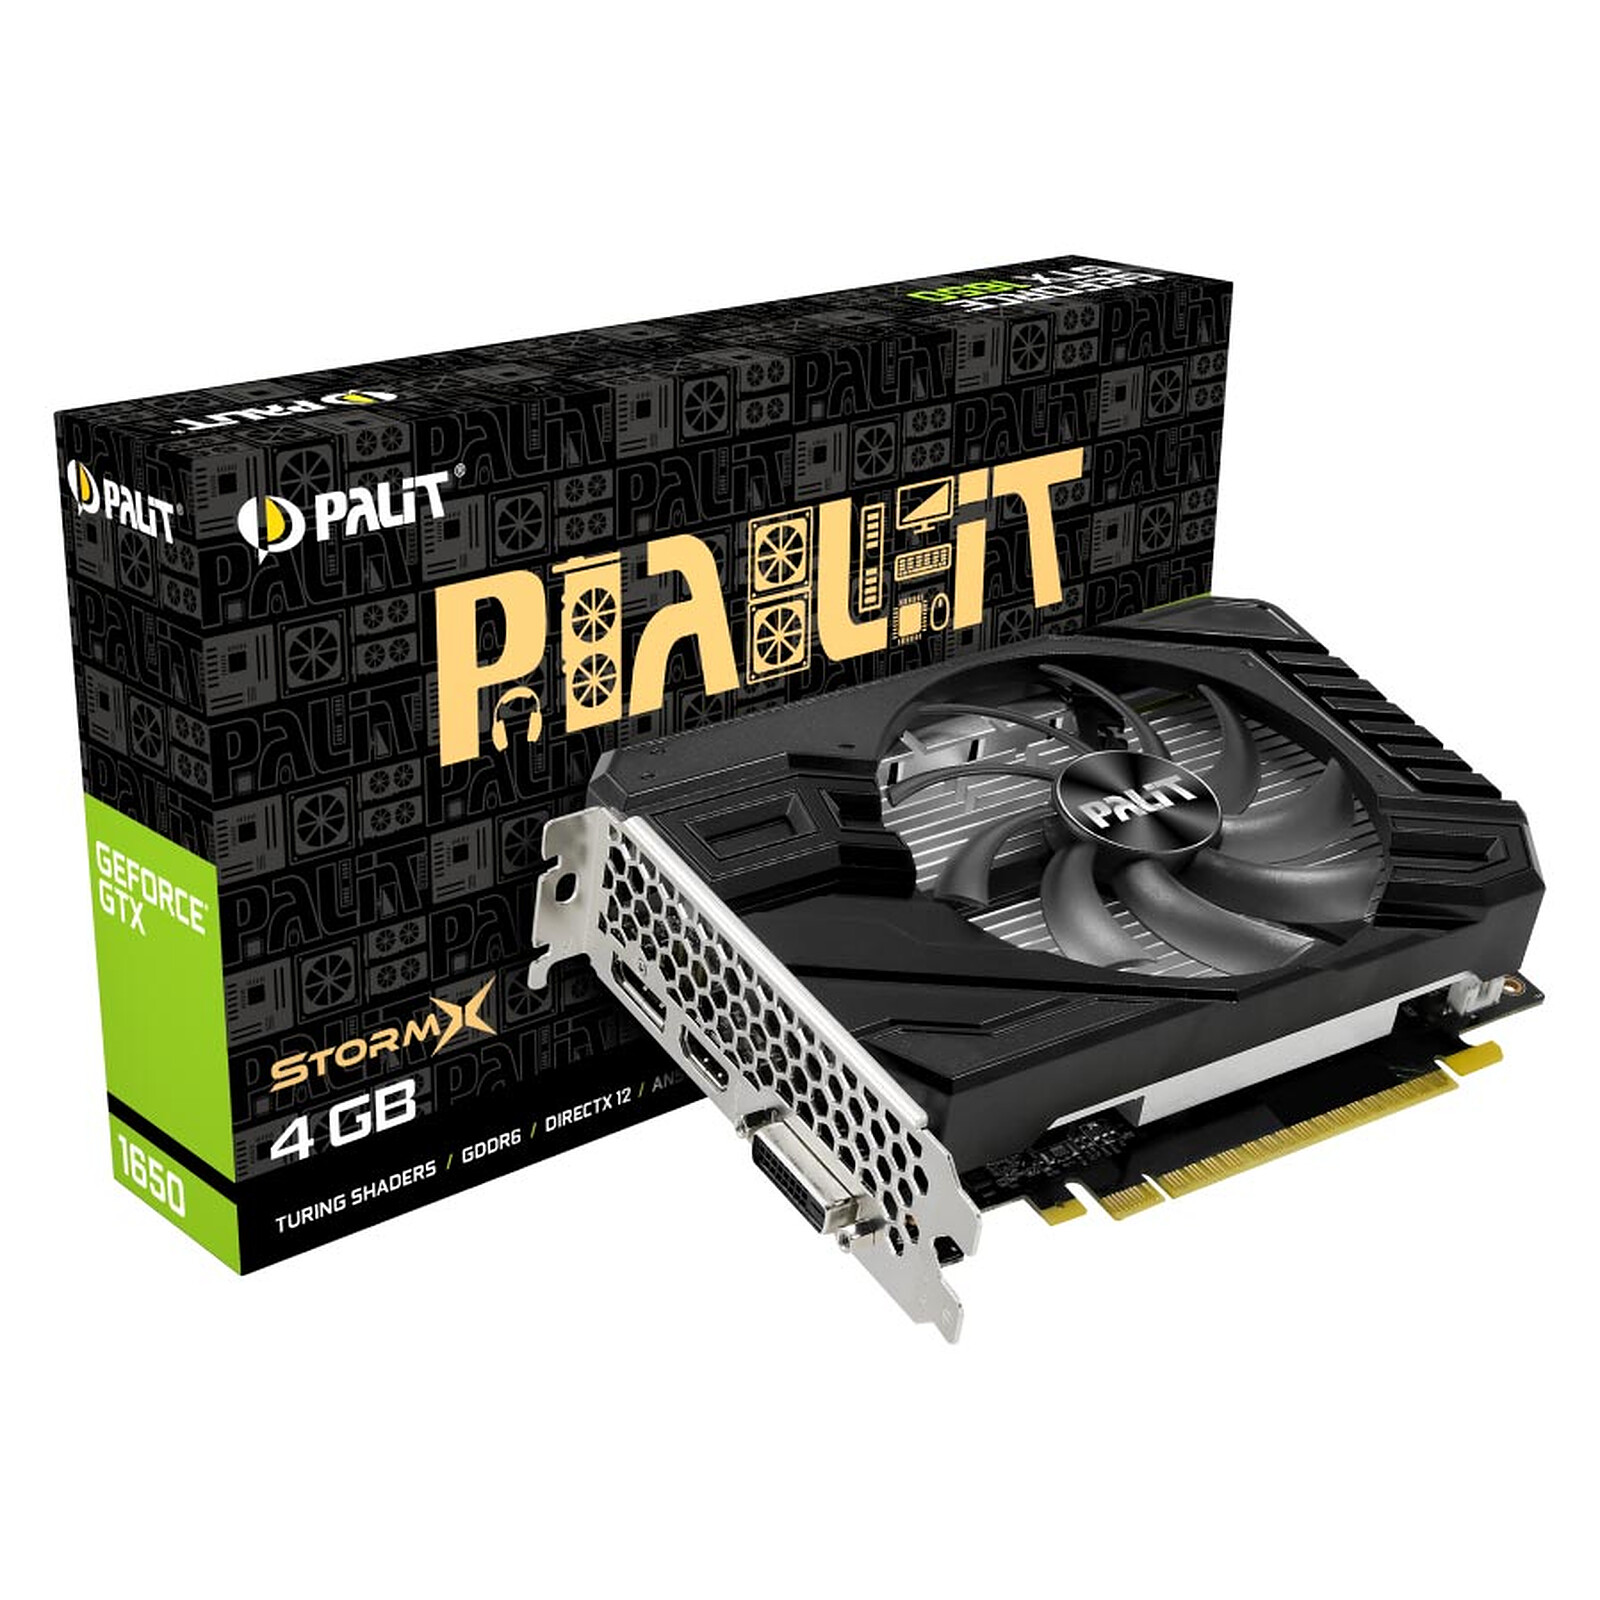 Palit GeForce GTX 1650 StormX - Graphics card - LDLC 3-year